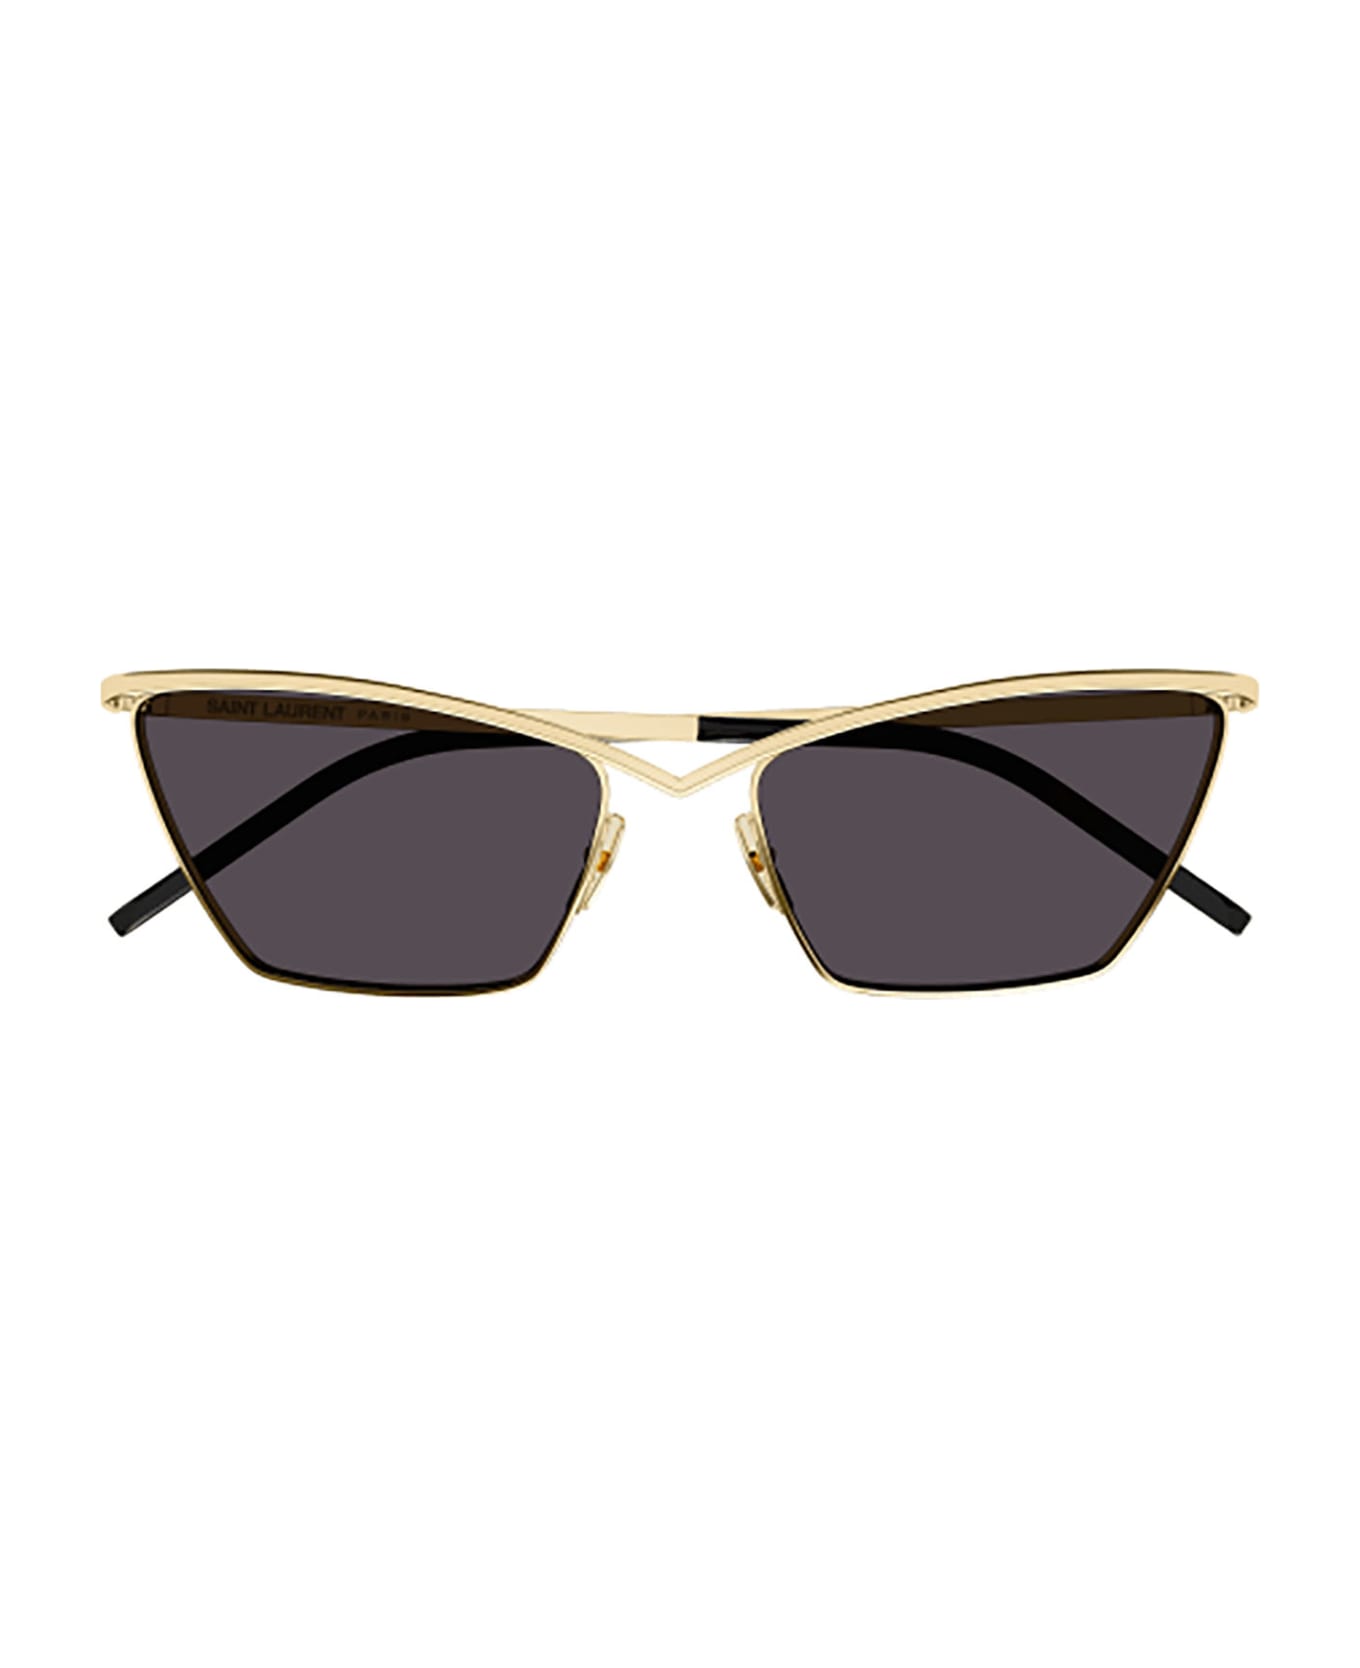 Saint Laurent Eyewear Sl 637 Sunglasses - 003 gold gold black サングラス